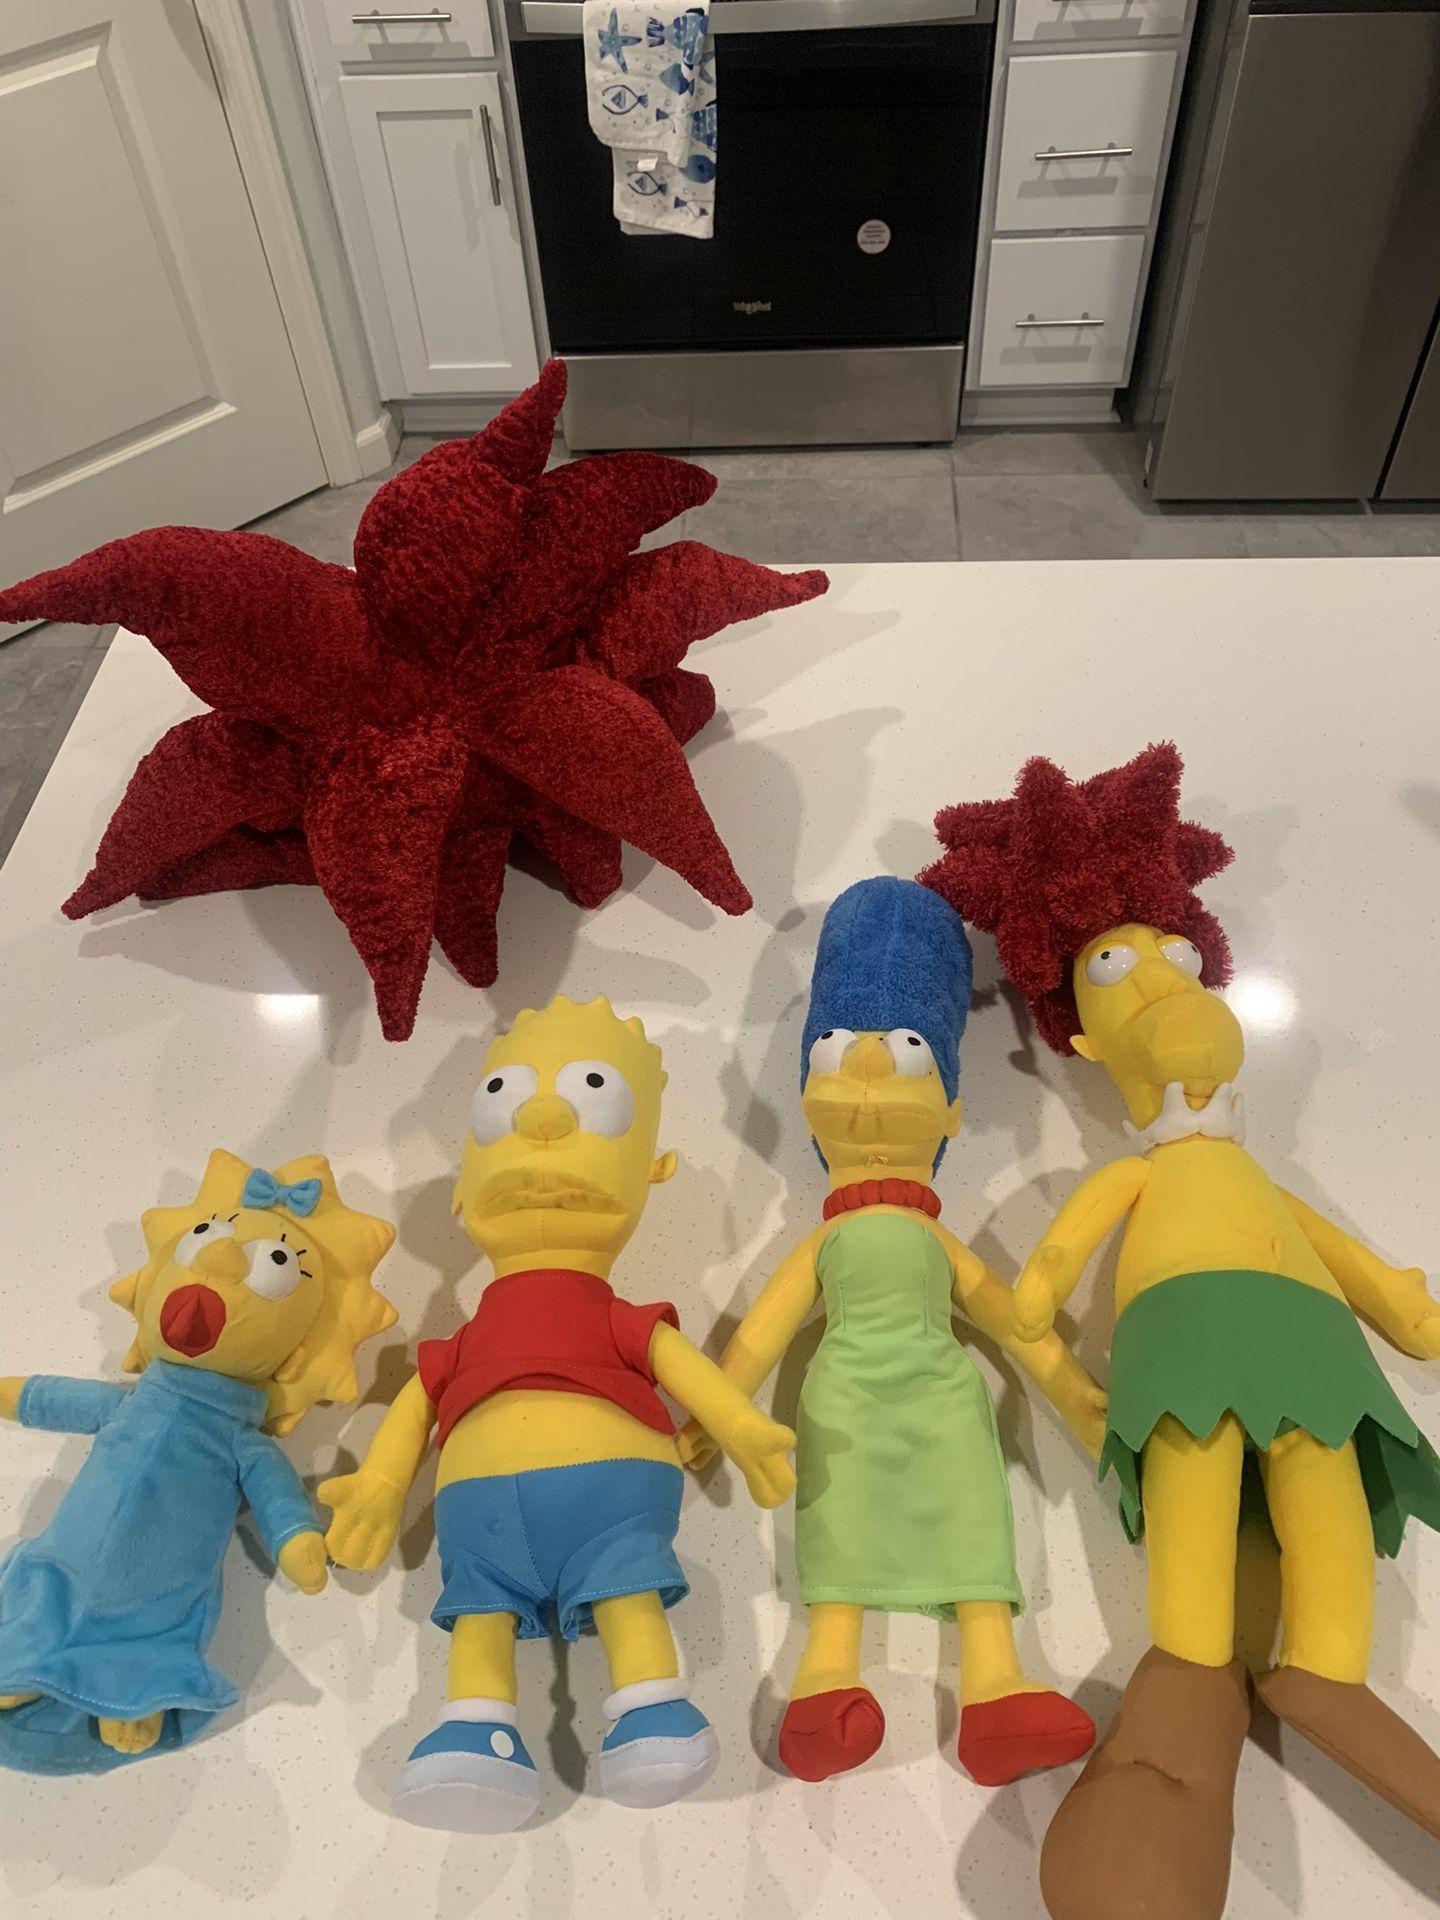 Simpson Stuffed Animals 